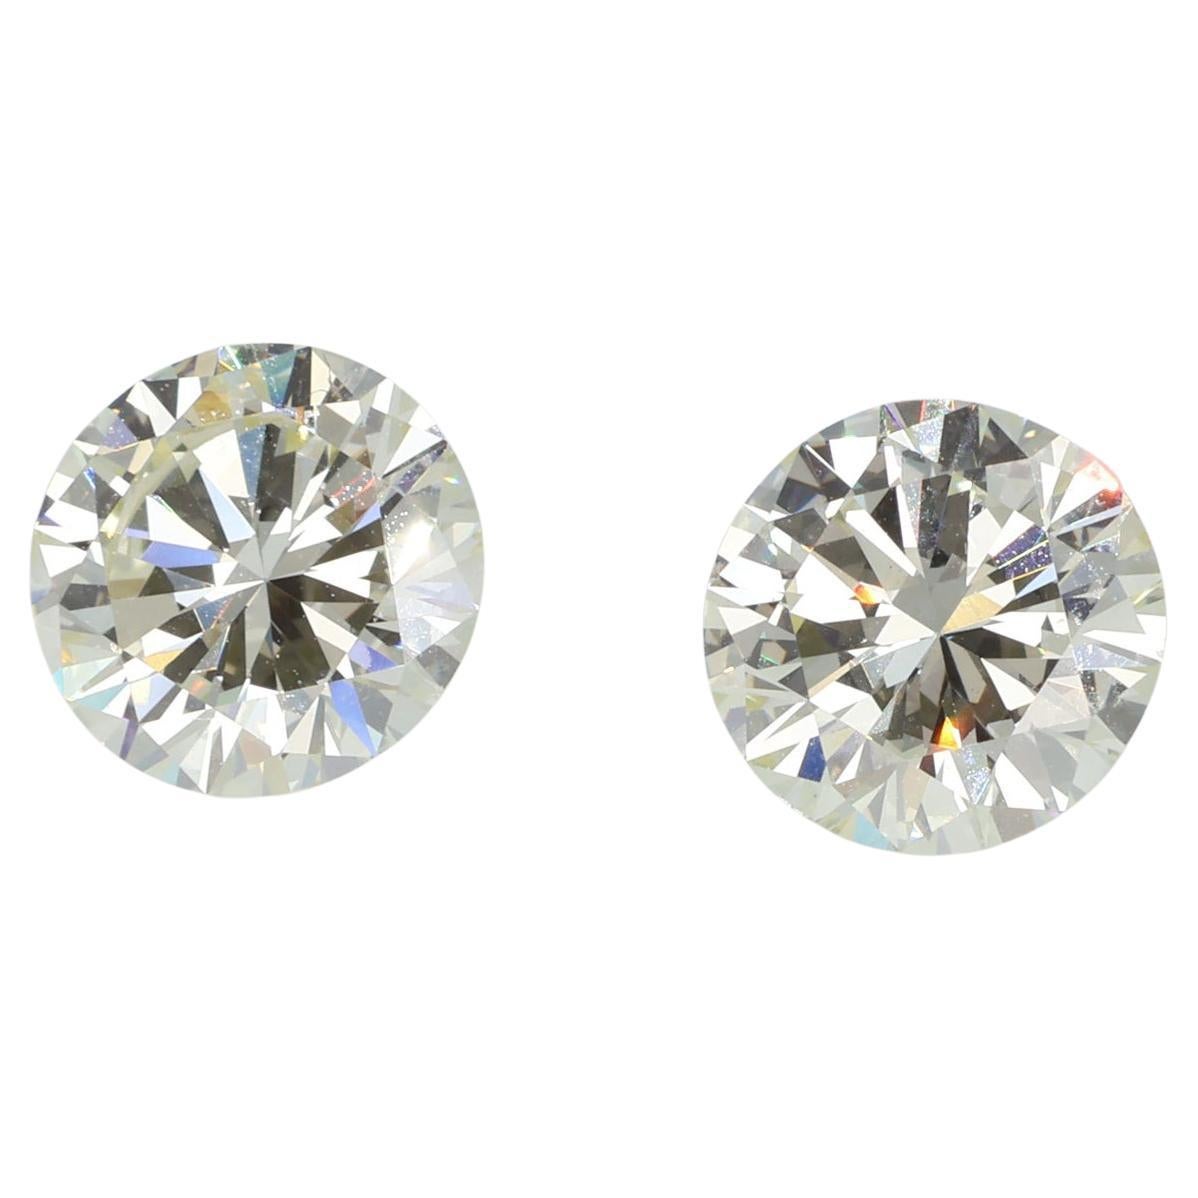 IGI 2.12 ct + 2.12 ct Diamond Duet VS1 - Very Light Yellow 4.24 ct Twin Pair For Sale